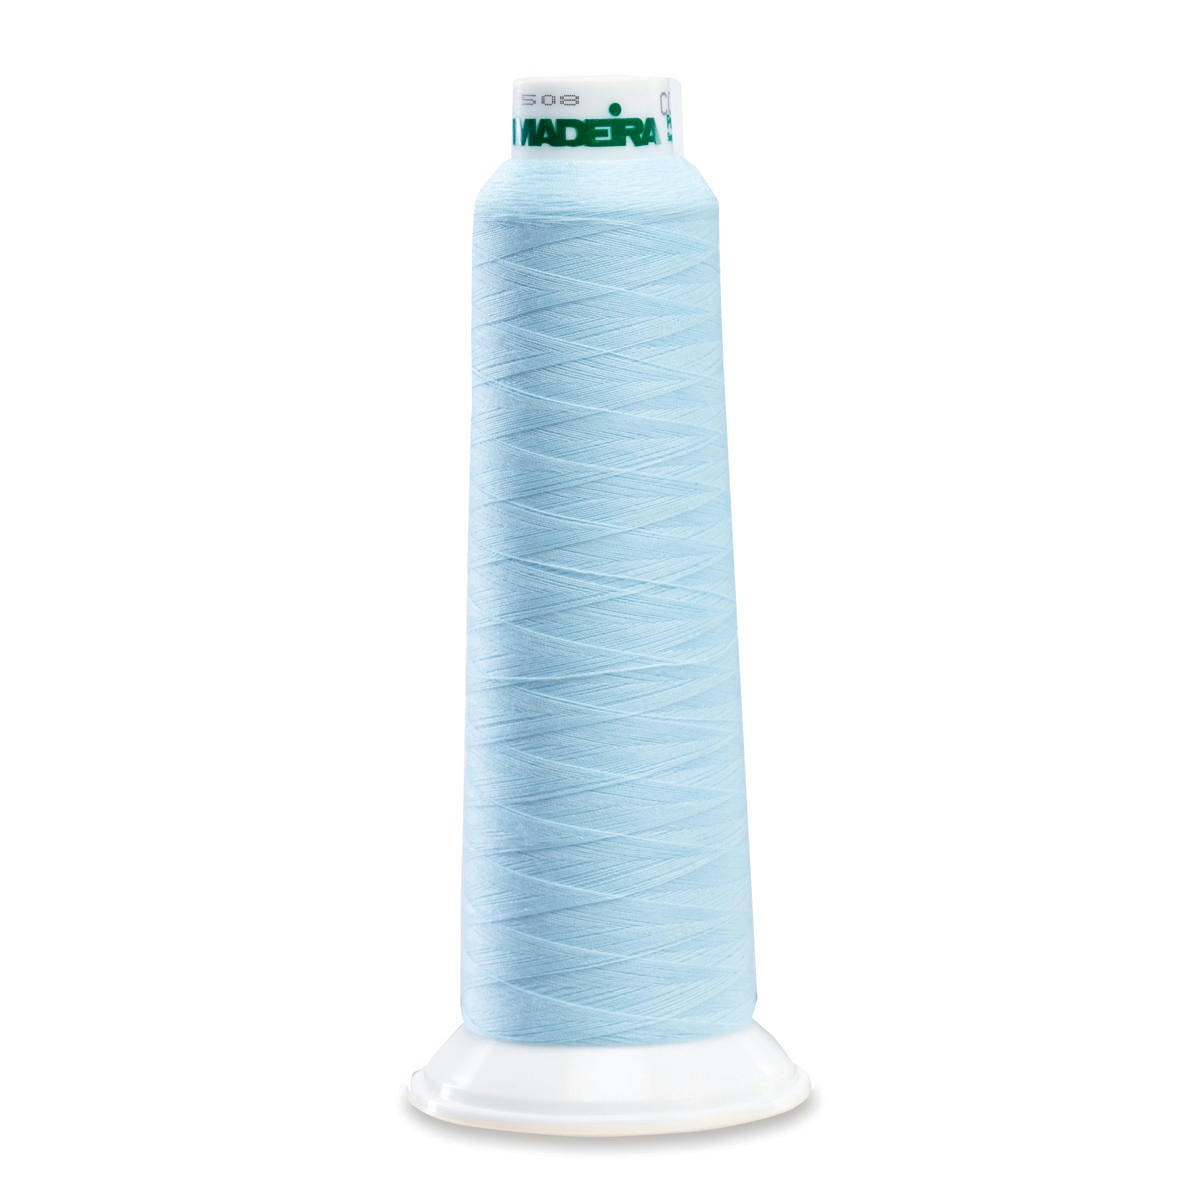 Madeira Aerolock Premium Serger Thread 2000 Yard Cone - BABY BLUE